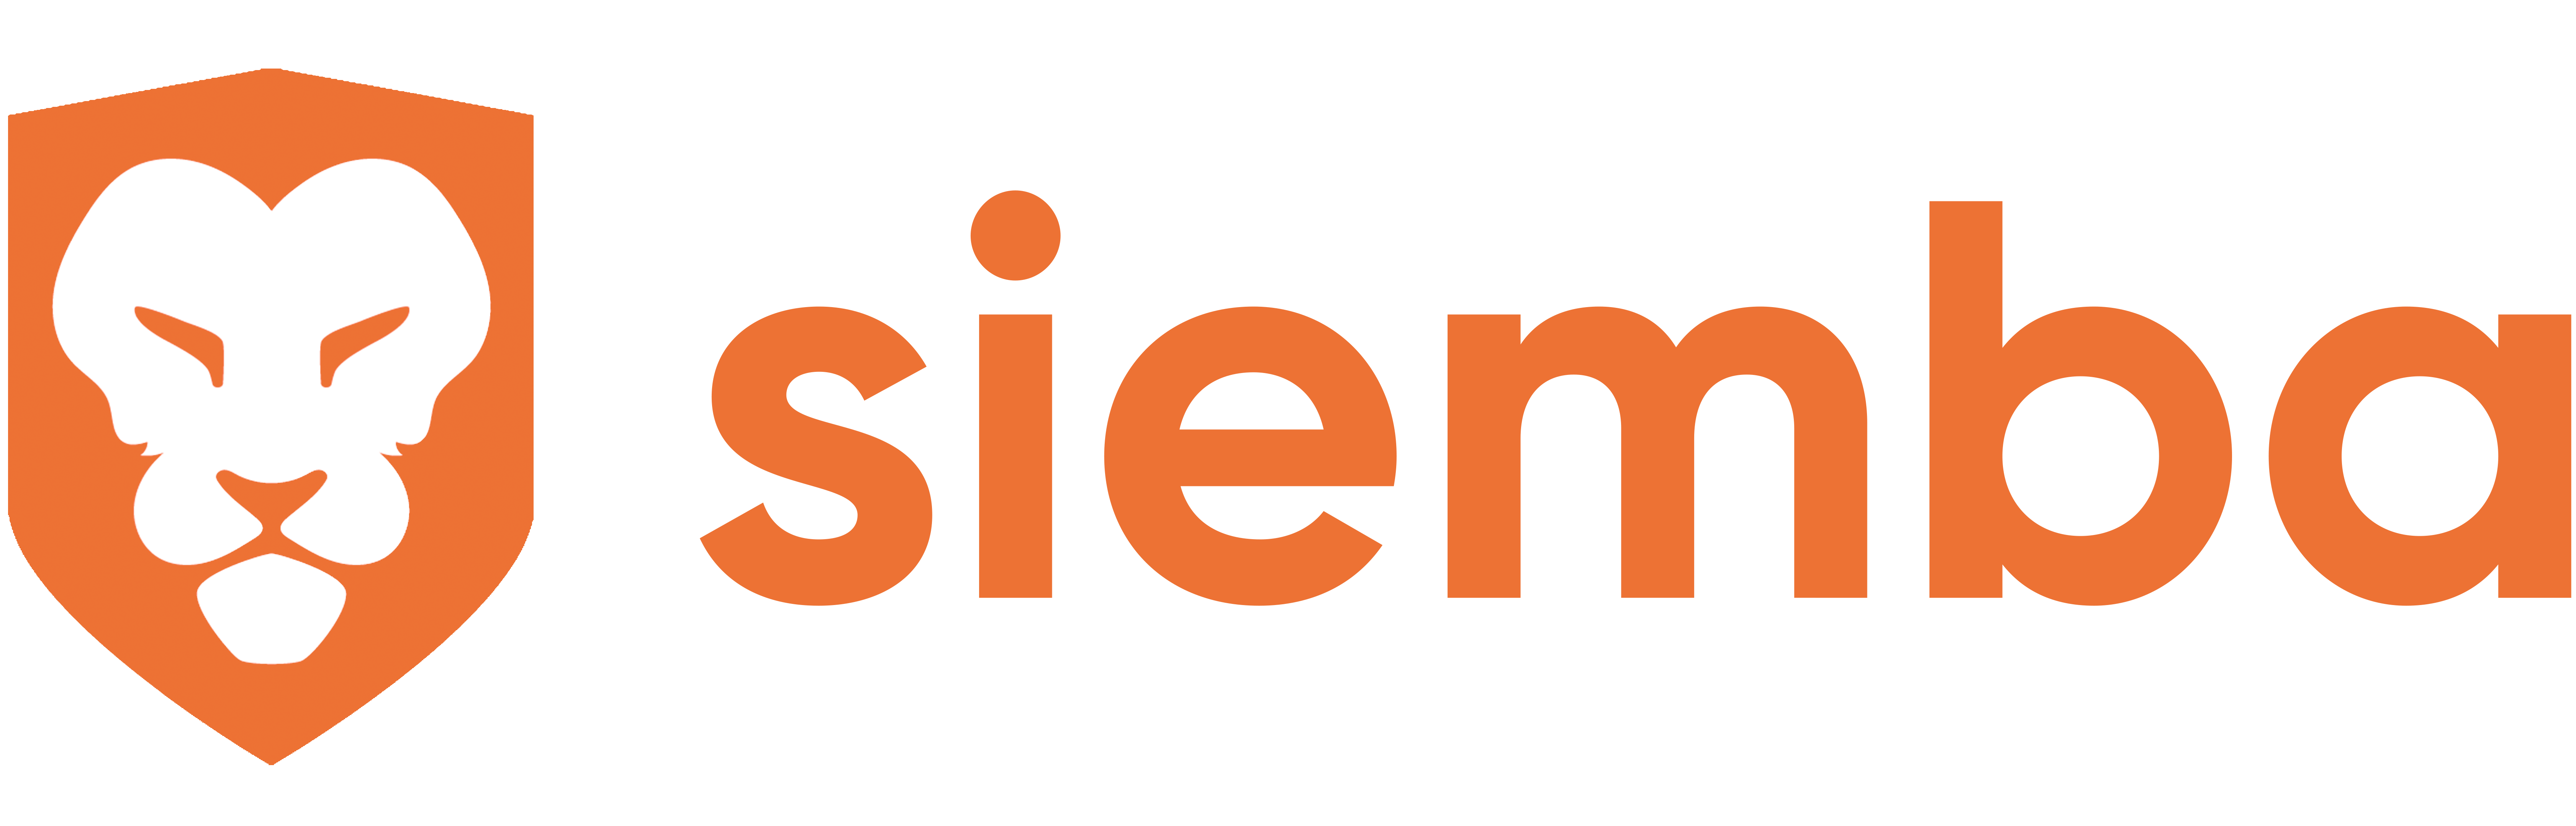 Siemba-1 (3)_updated